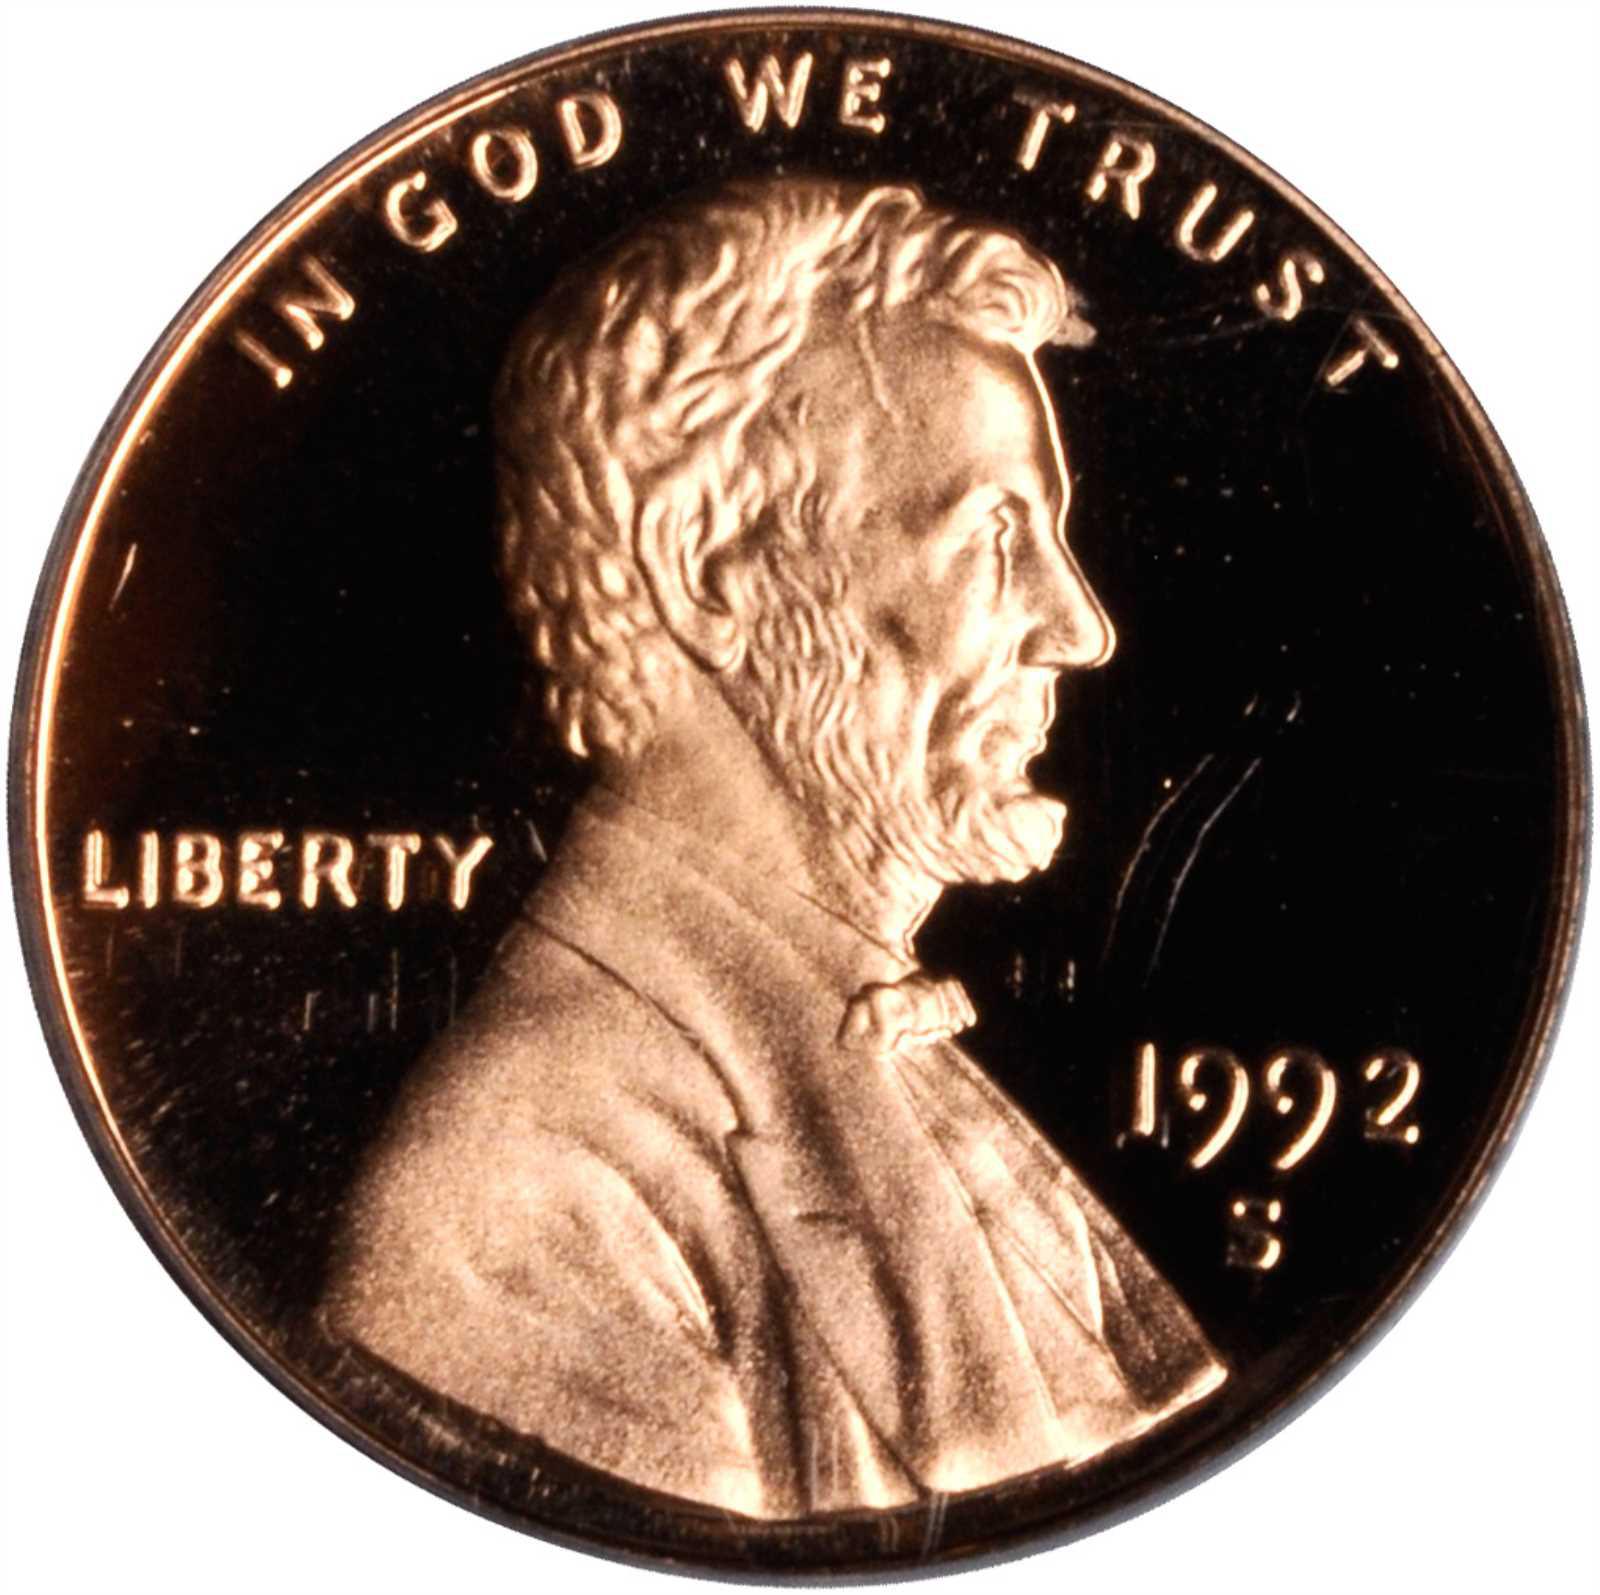 1992 coin value